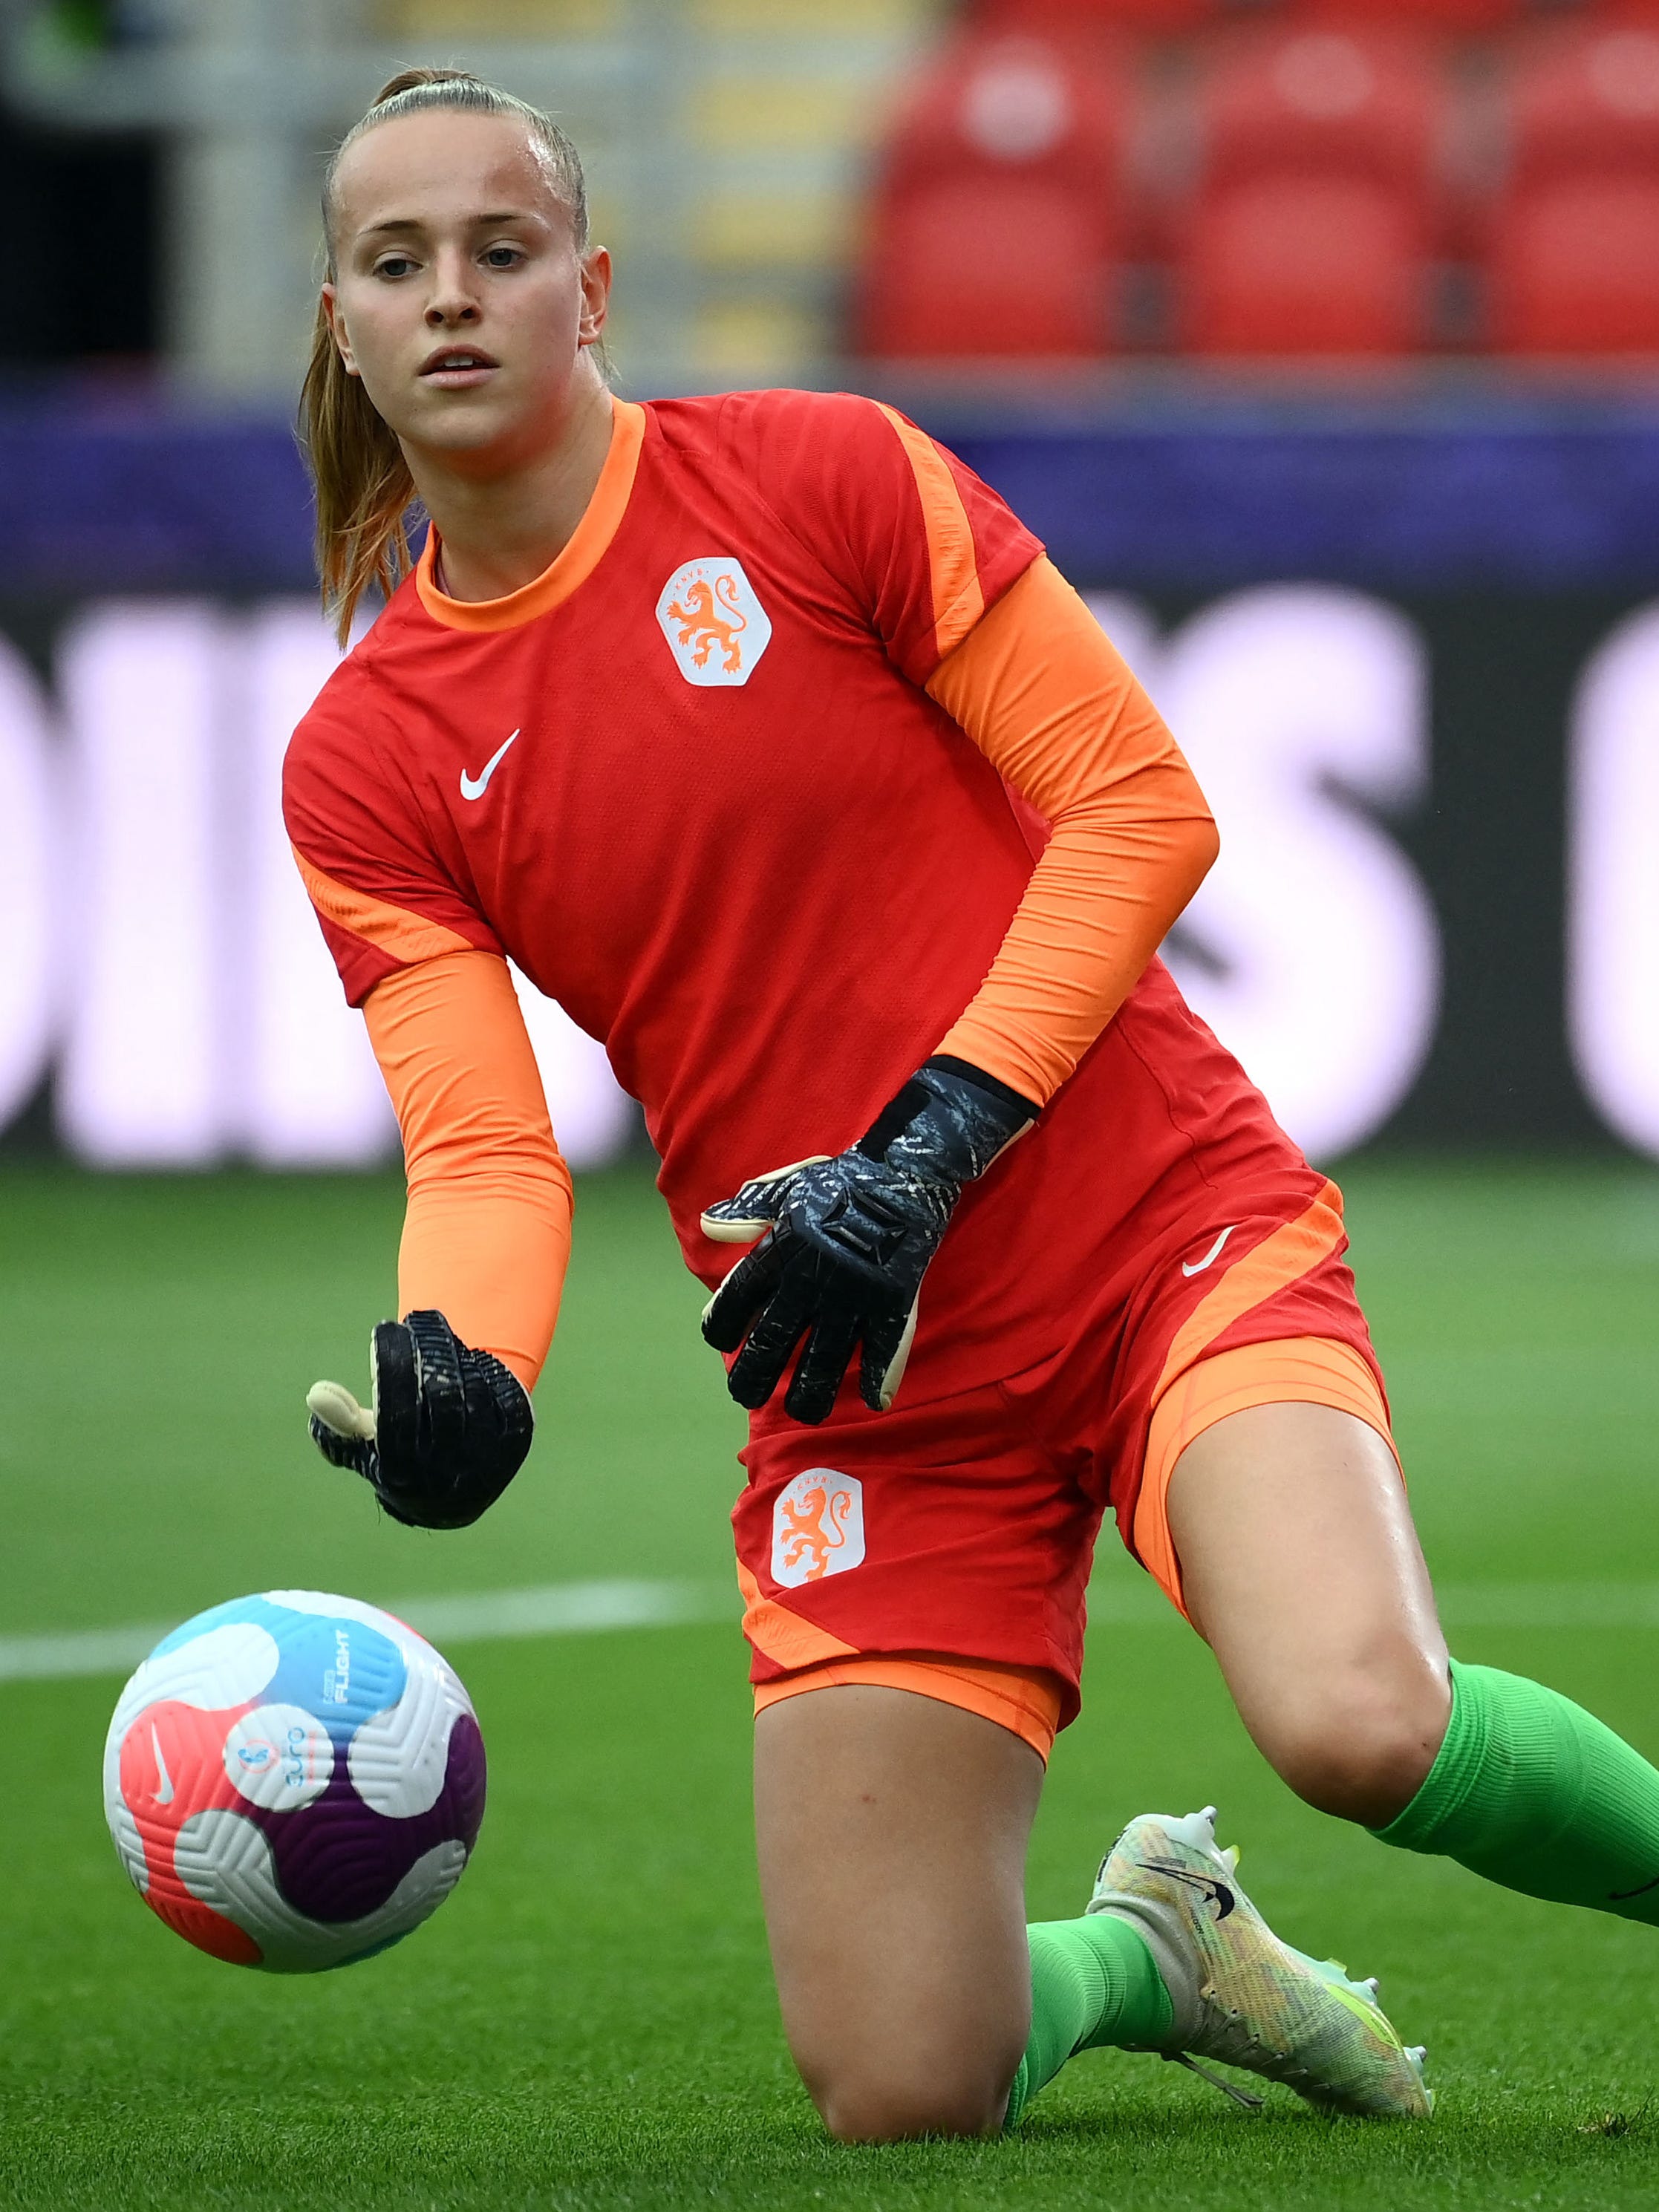 An action image of Daphne van Domselaar playing soccer.